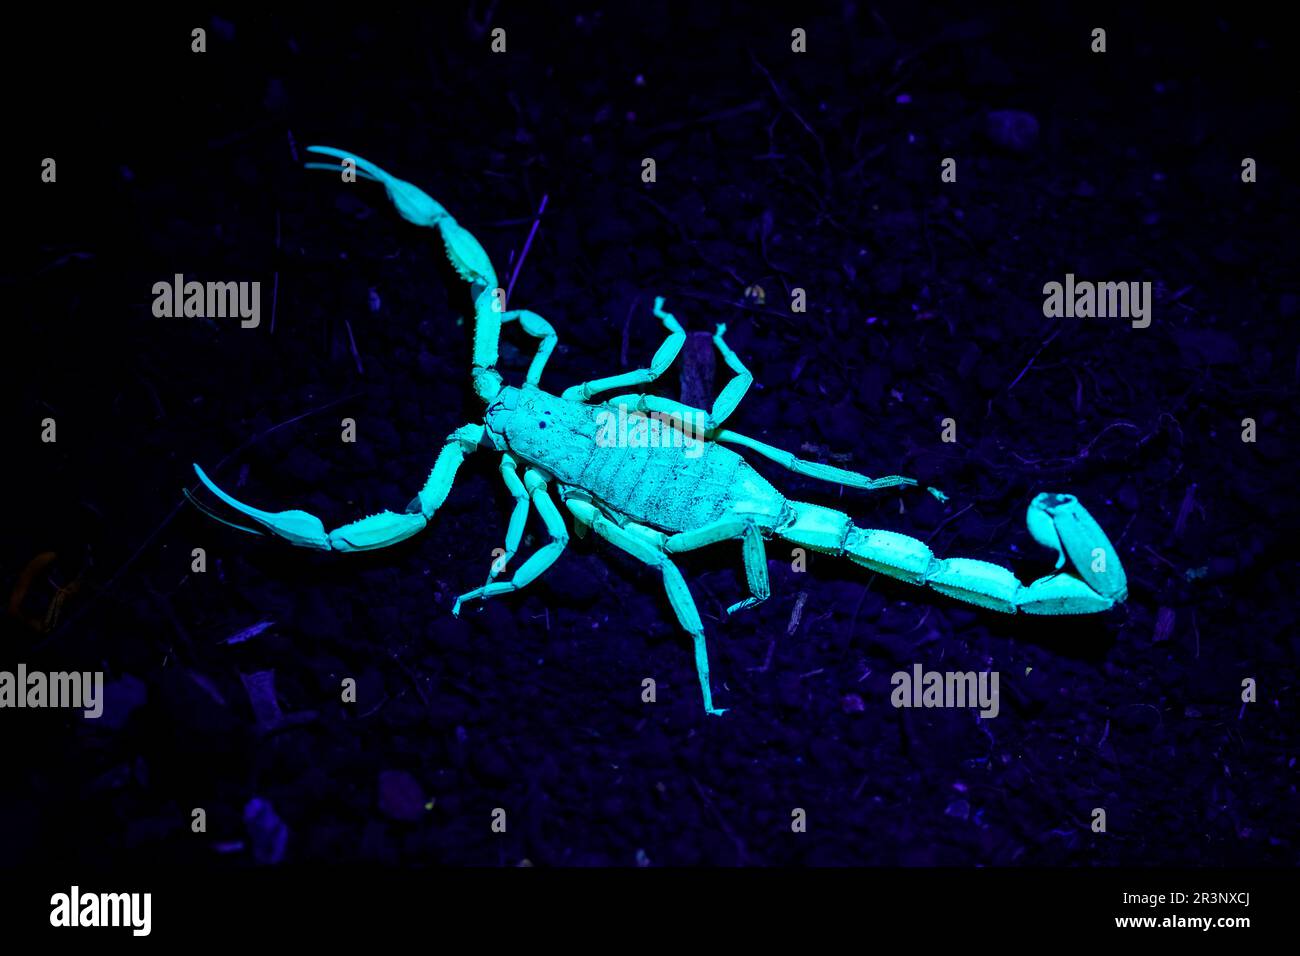 Edwards Rindenskorpion (Centuroides edwardsii) leuchtet im UV-Licht. Osa-Halbinsel, Costa Rica. Stockfoto